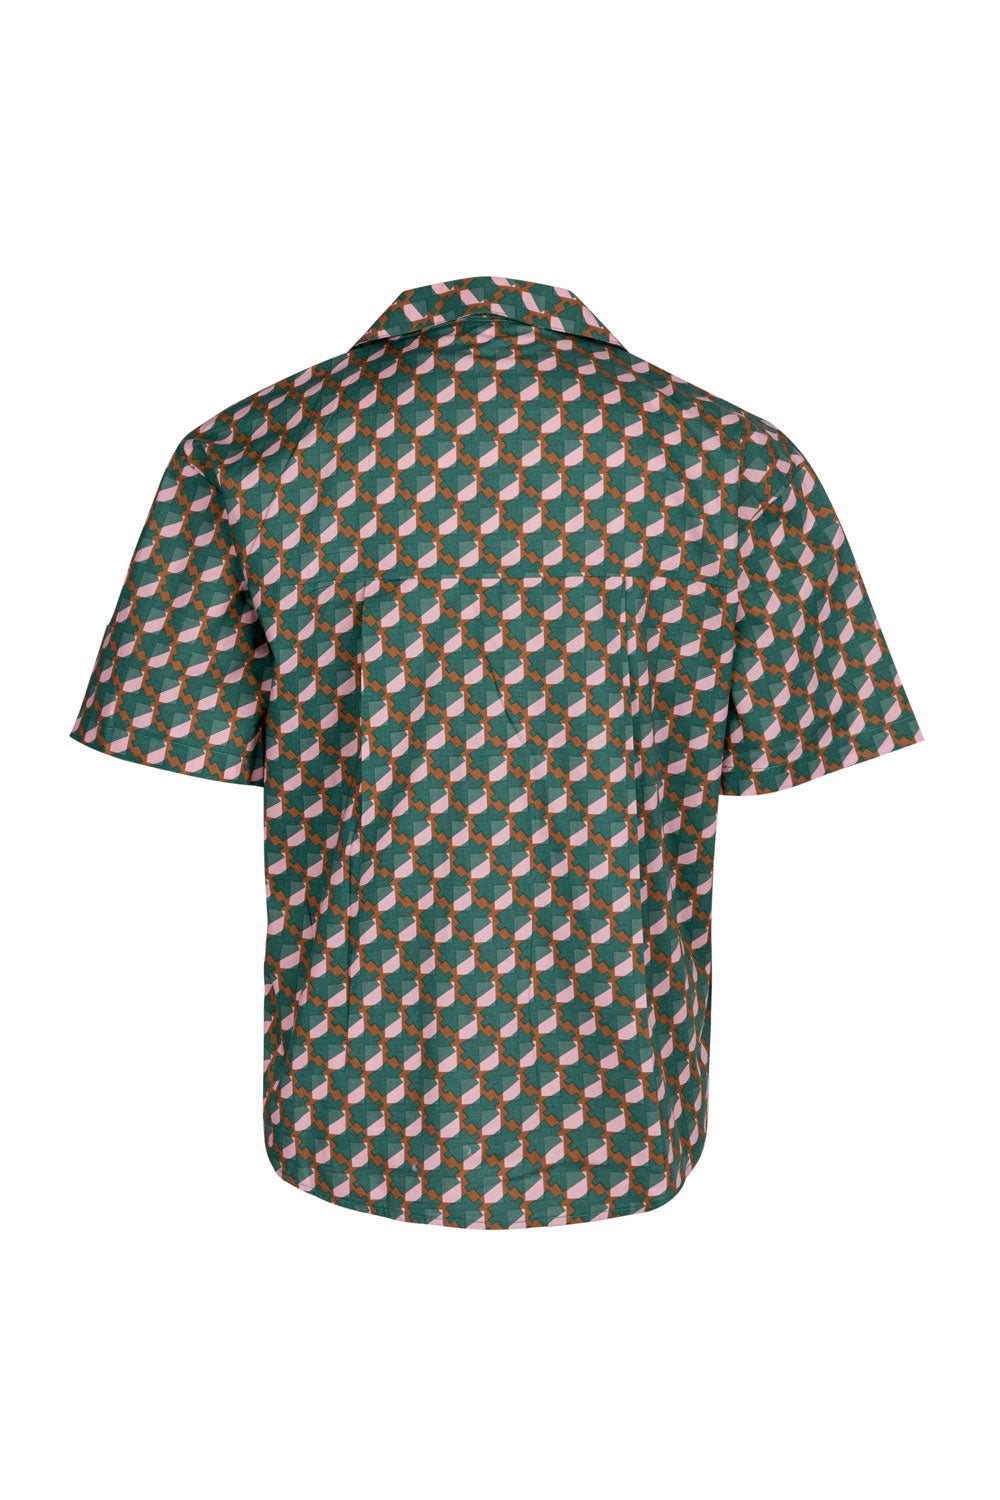 Geometric Bowler Shirt